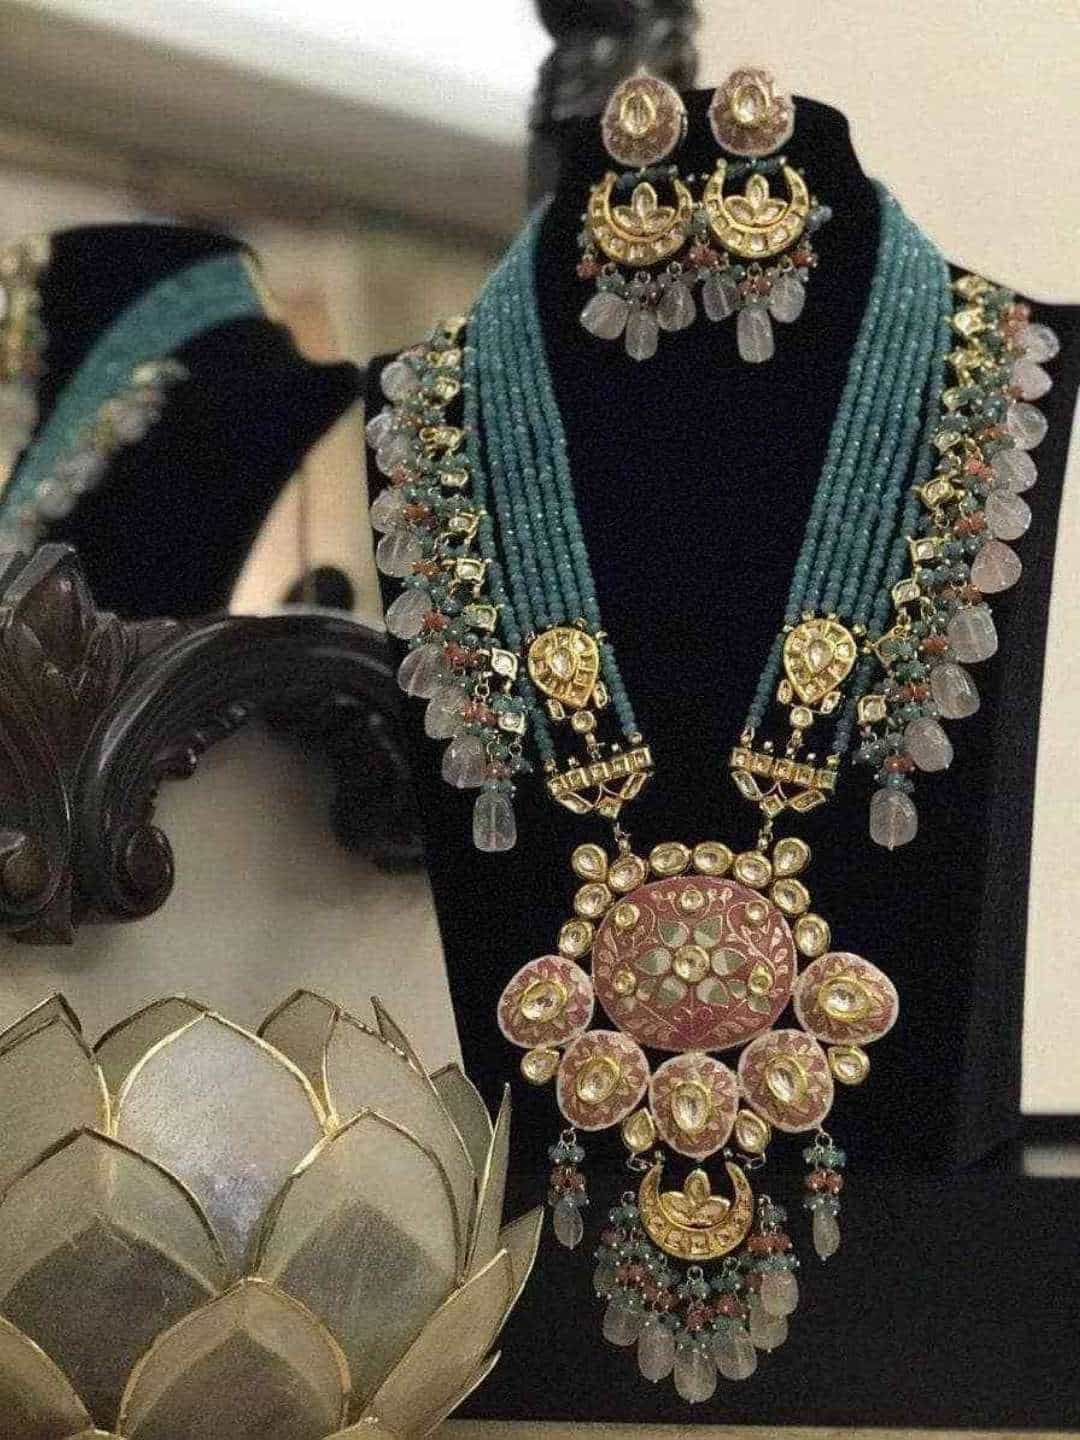 Ishhaara Blue Handpainted Kundan Pendant Necklace